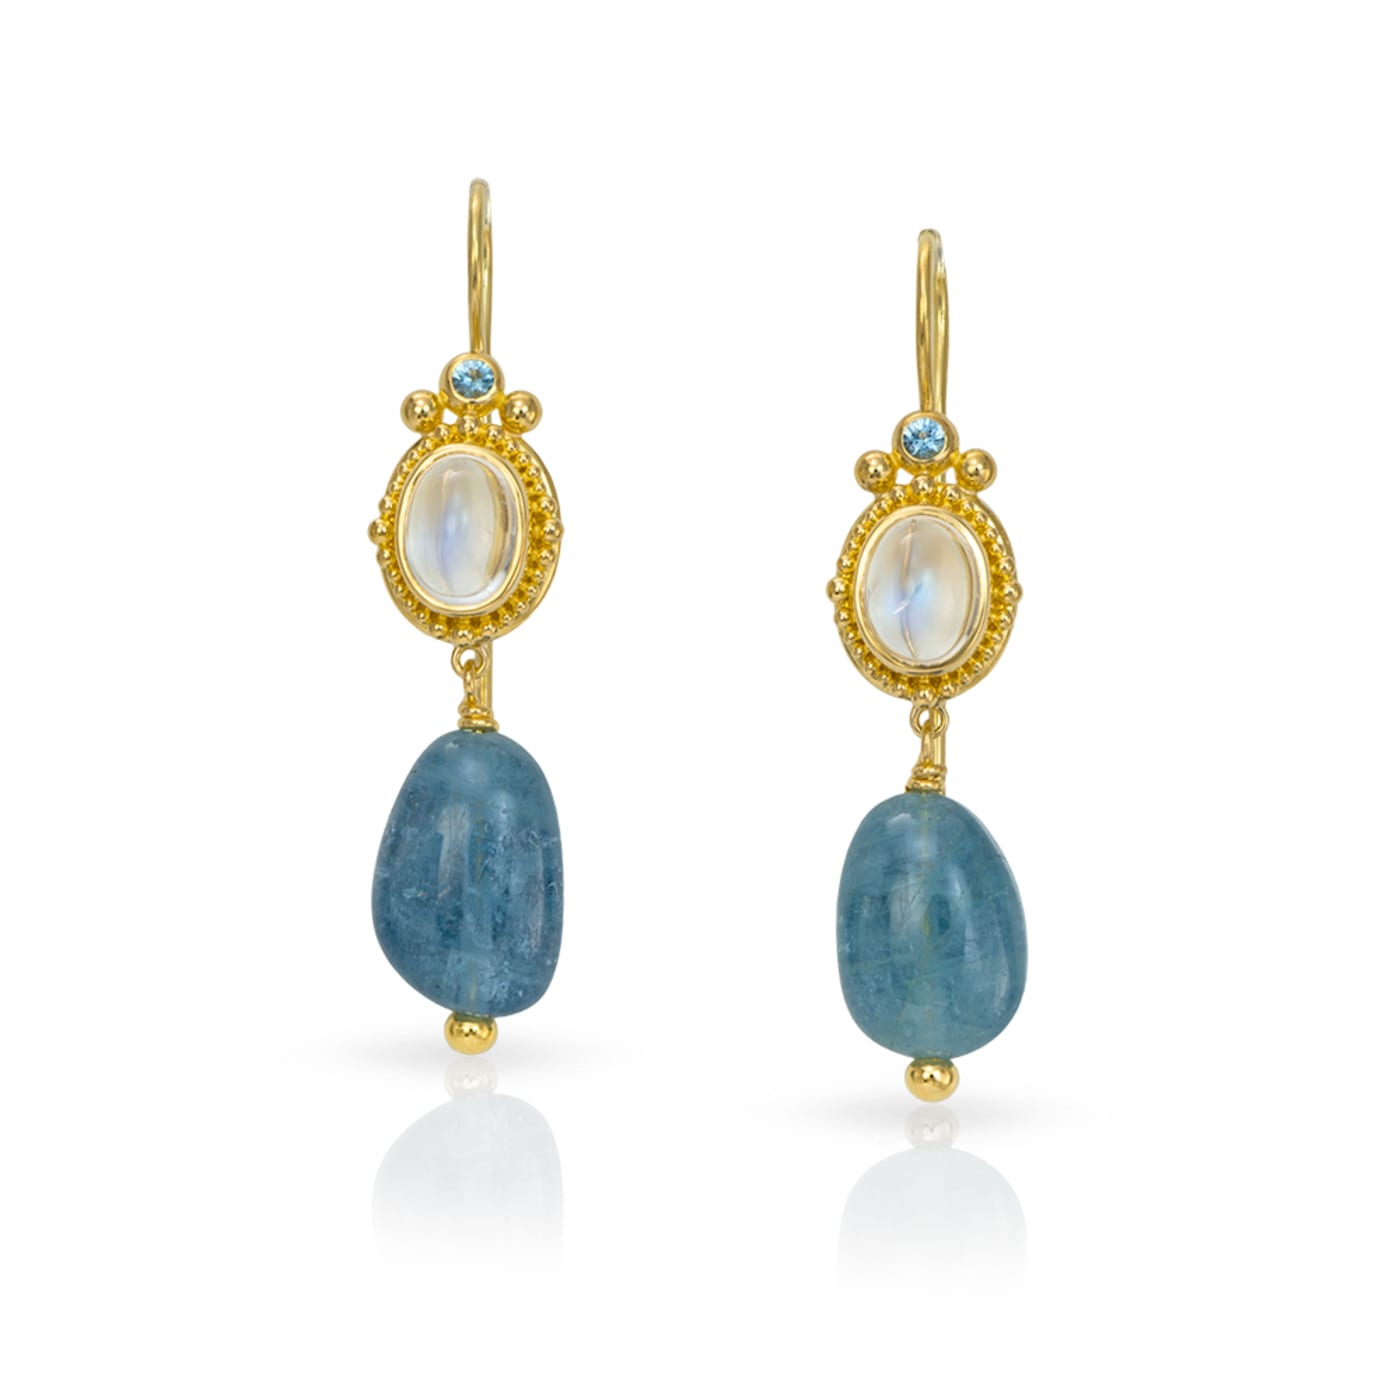 Aquamarine and moonstone dangle earrings from Zaffiro 